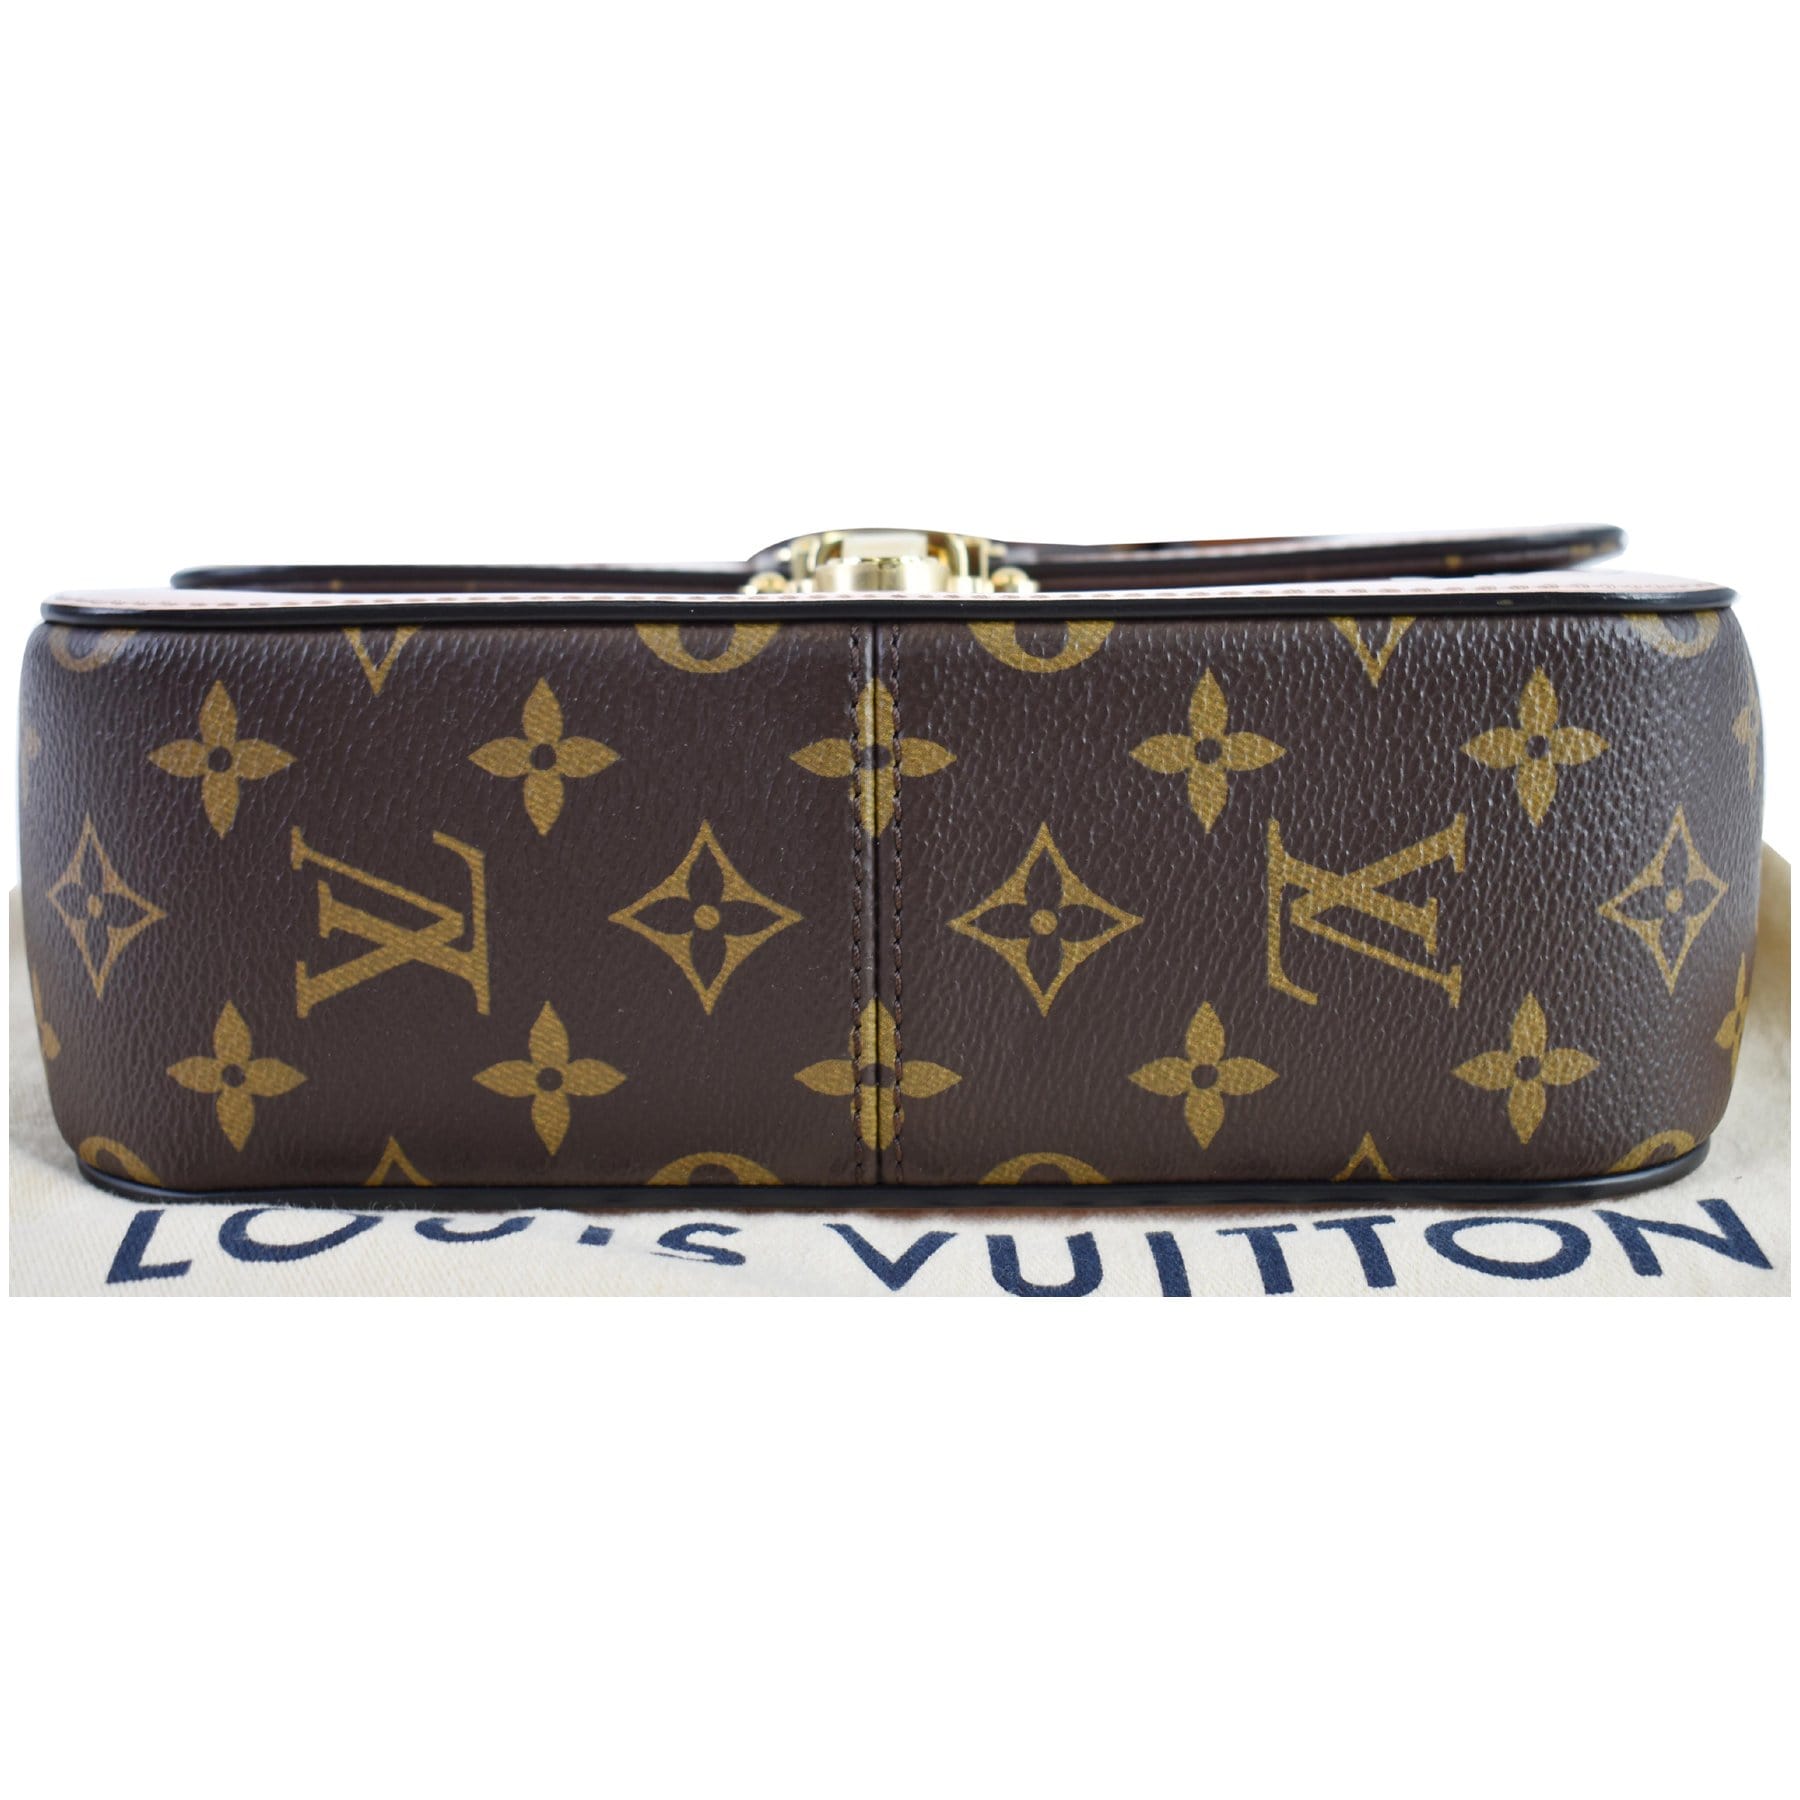 Louis Vuitton - Authenticated Cherrywood Handbag - Patent Leather Black Plain for Women, Very Good Condition